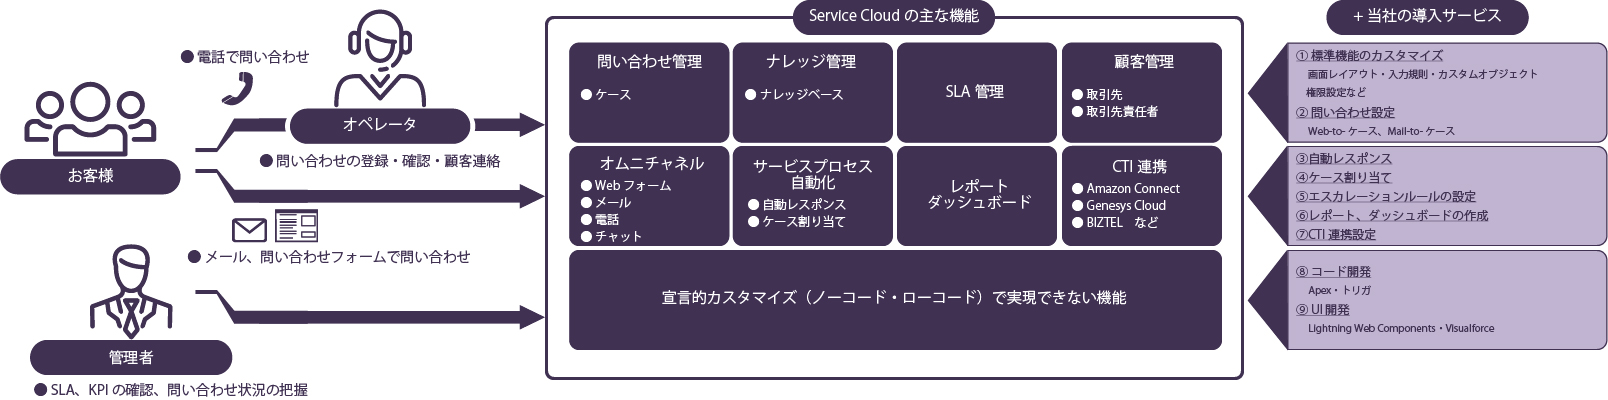 Service Cloud導入サービス